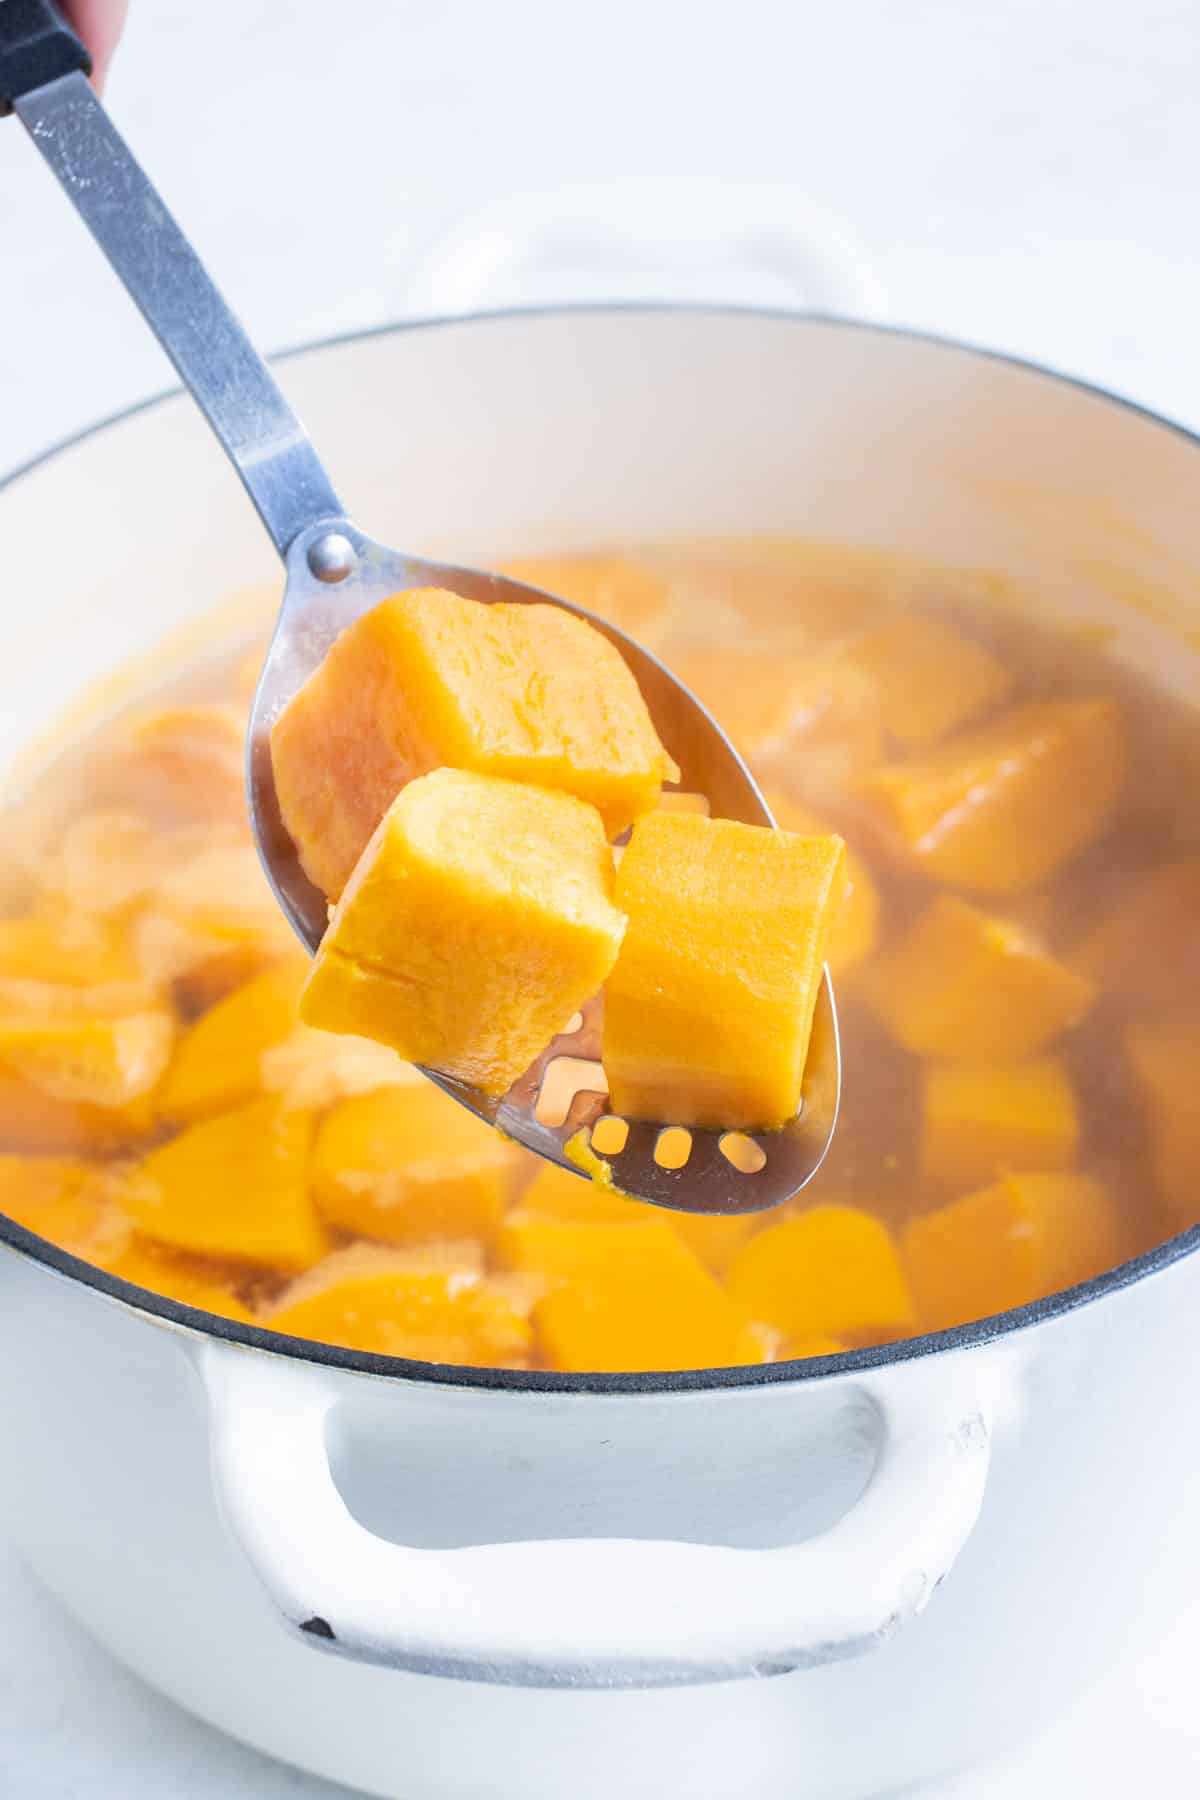 Sweet potatoes are boiled until fork tender.